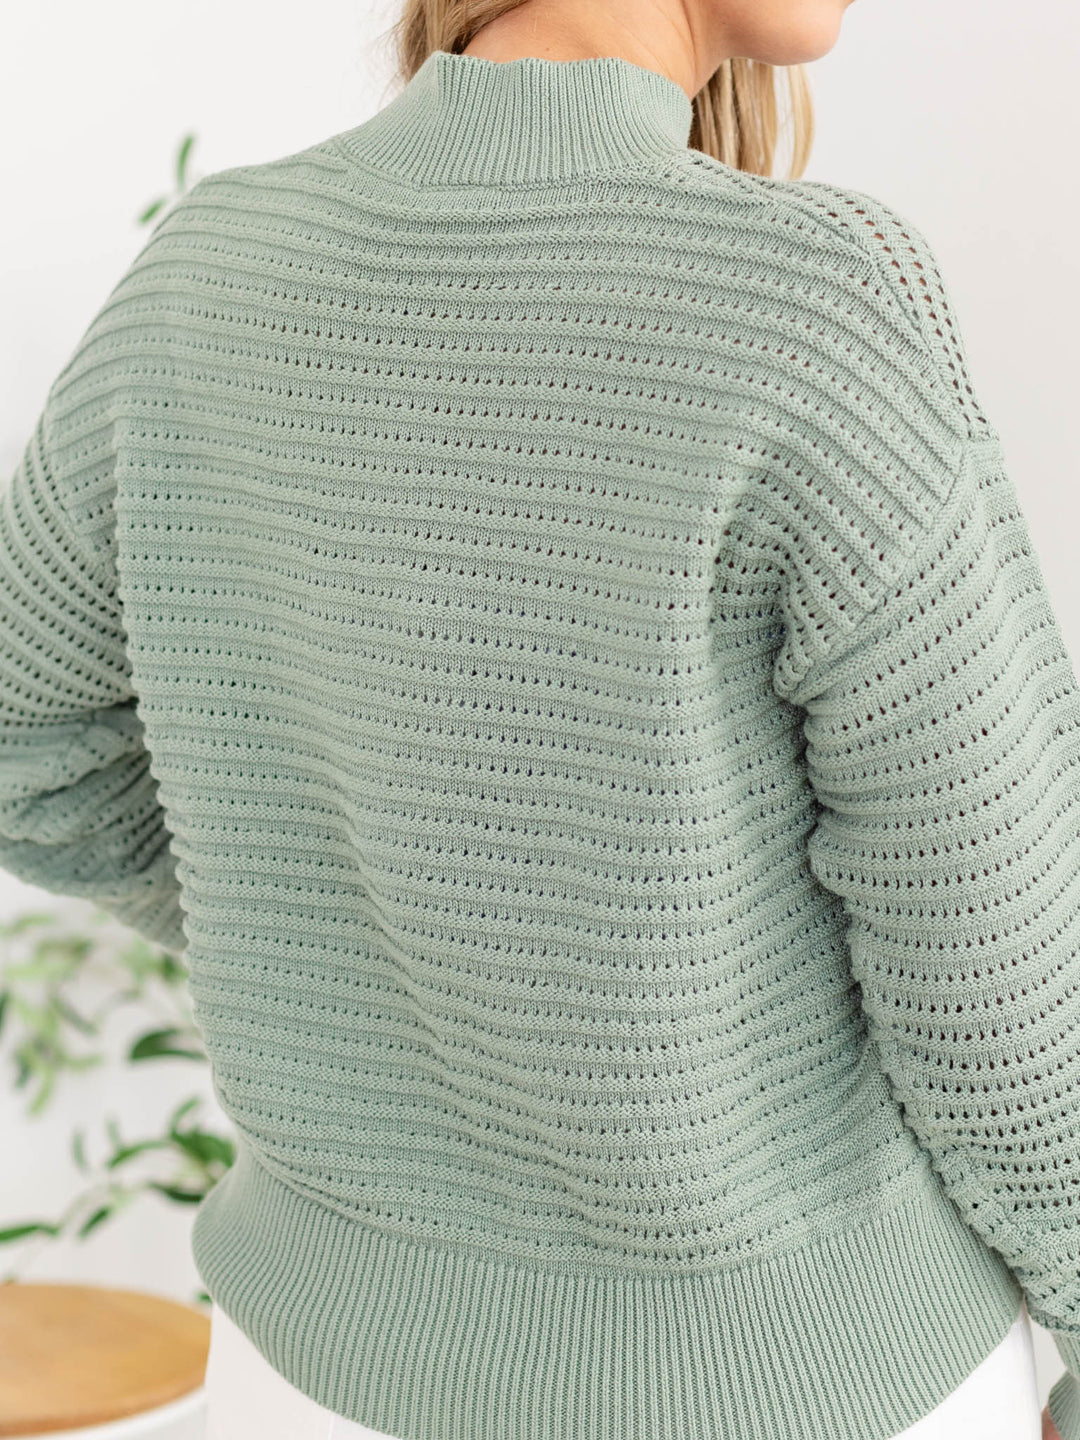 Varley Franco Knit CrewSweaters